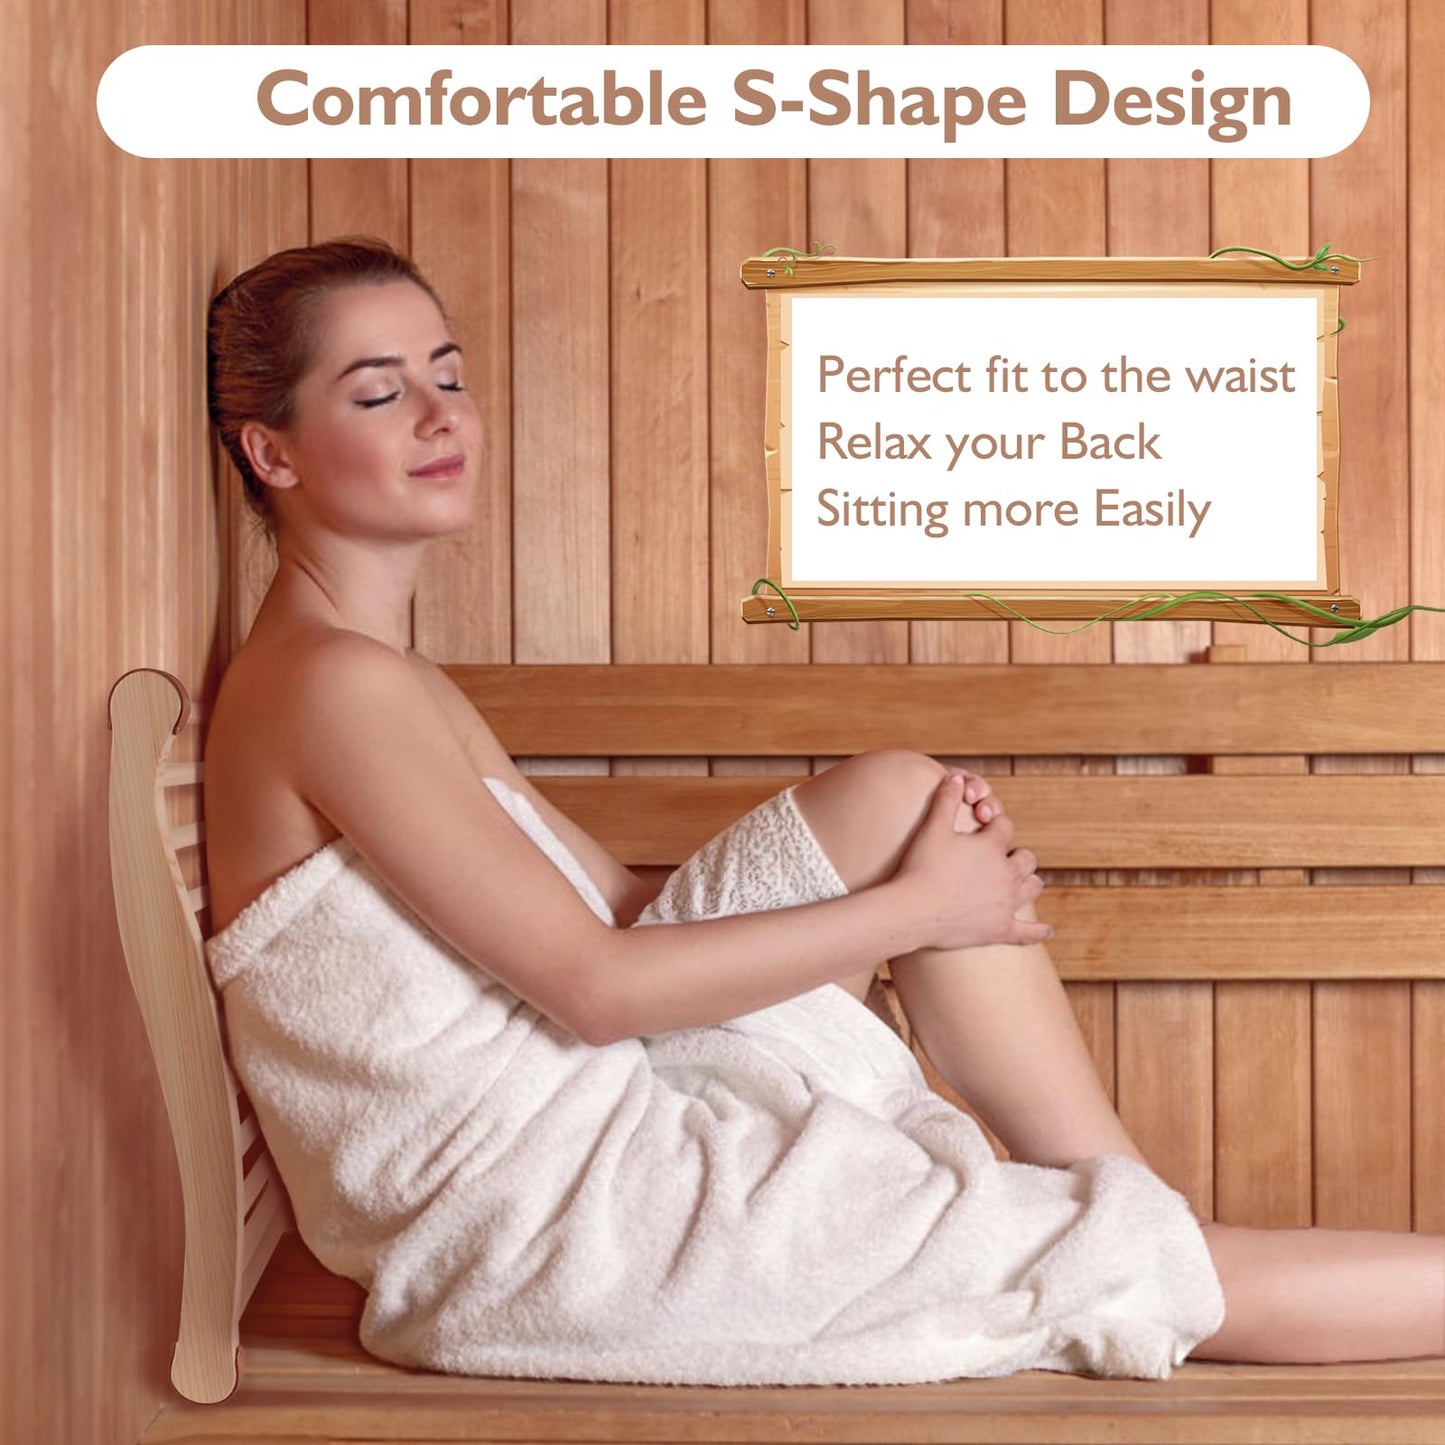 Sauna Backrest Wiiyita Sauna Accessories Wooden Slip-Resistant Non-Toxic Comfortable S-Shape Design Sauna Chair with Back, Sauna Accessories for Any